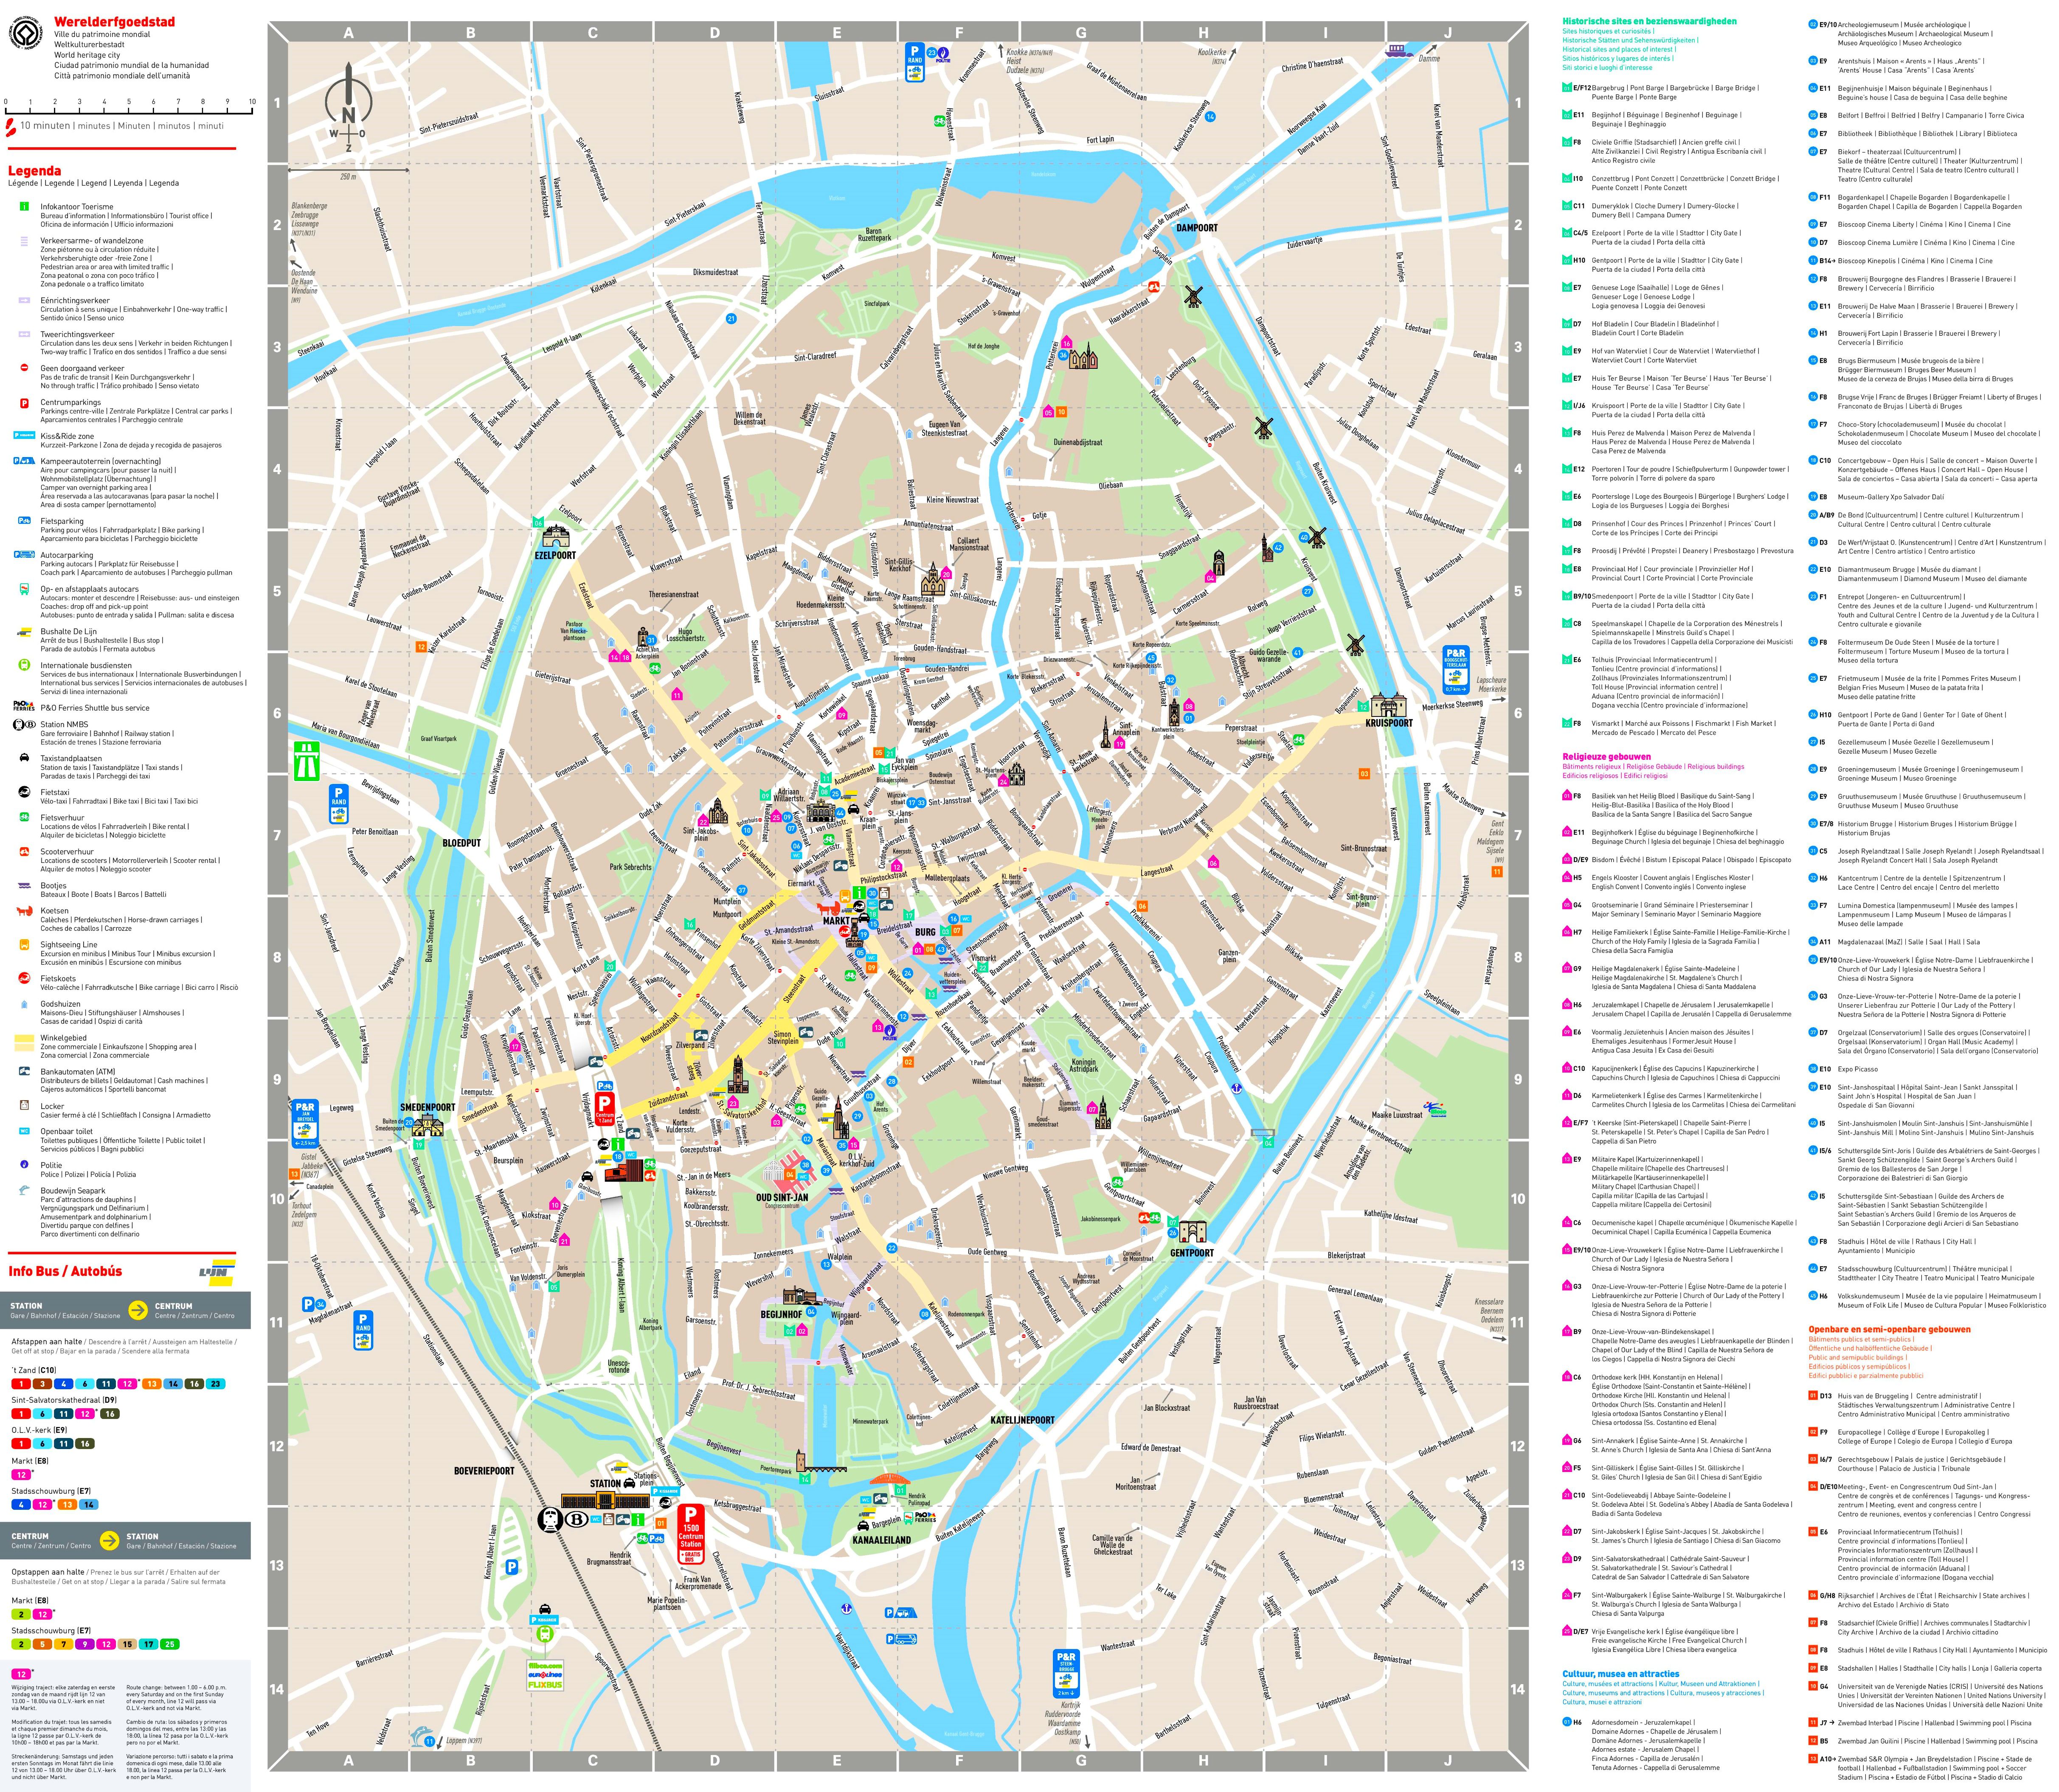 brugge tourist map pdf